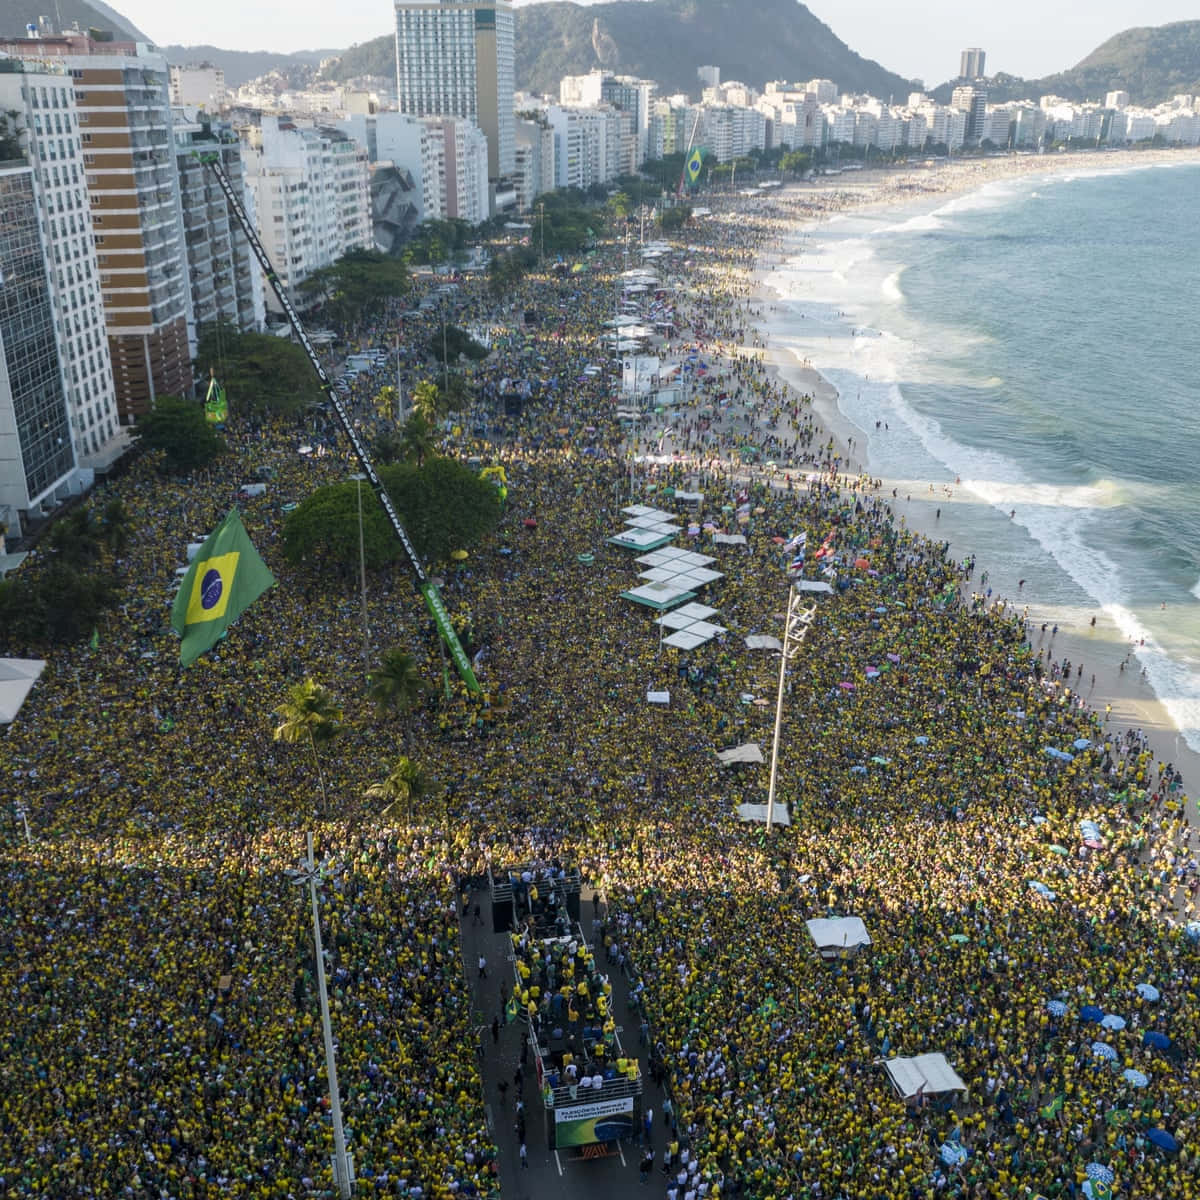 Download A Stunning Day at Brazilian Beach Wallpaper | Wallpapers.com